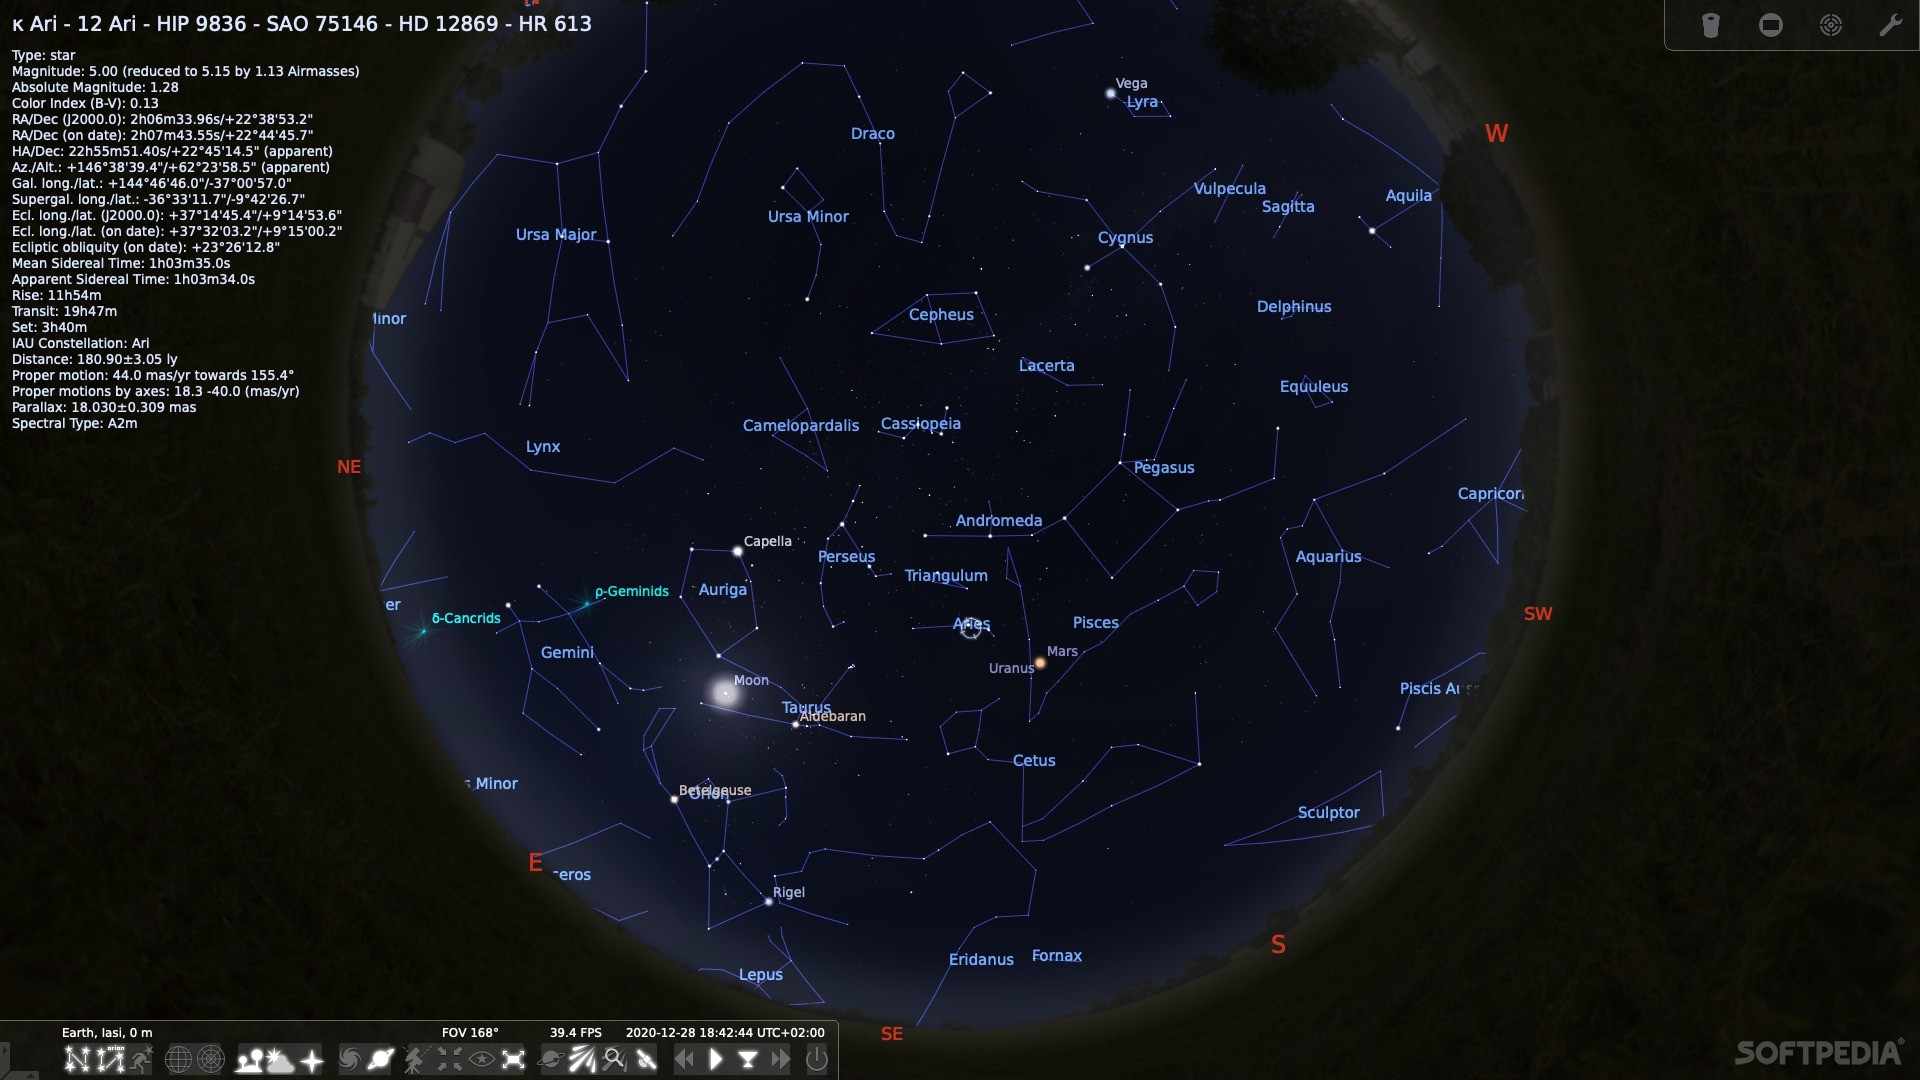 screenshot in stellarium